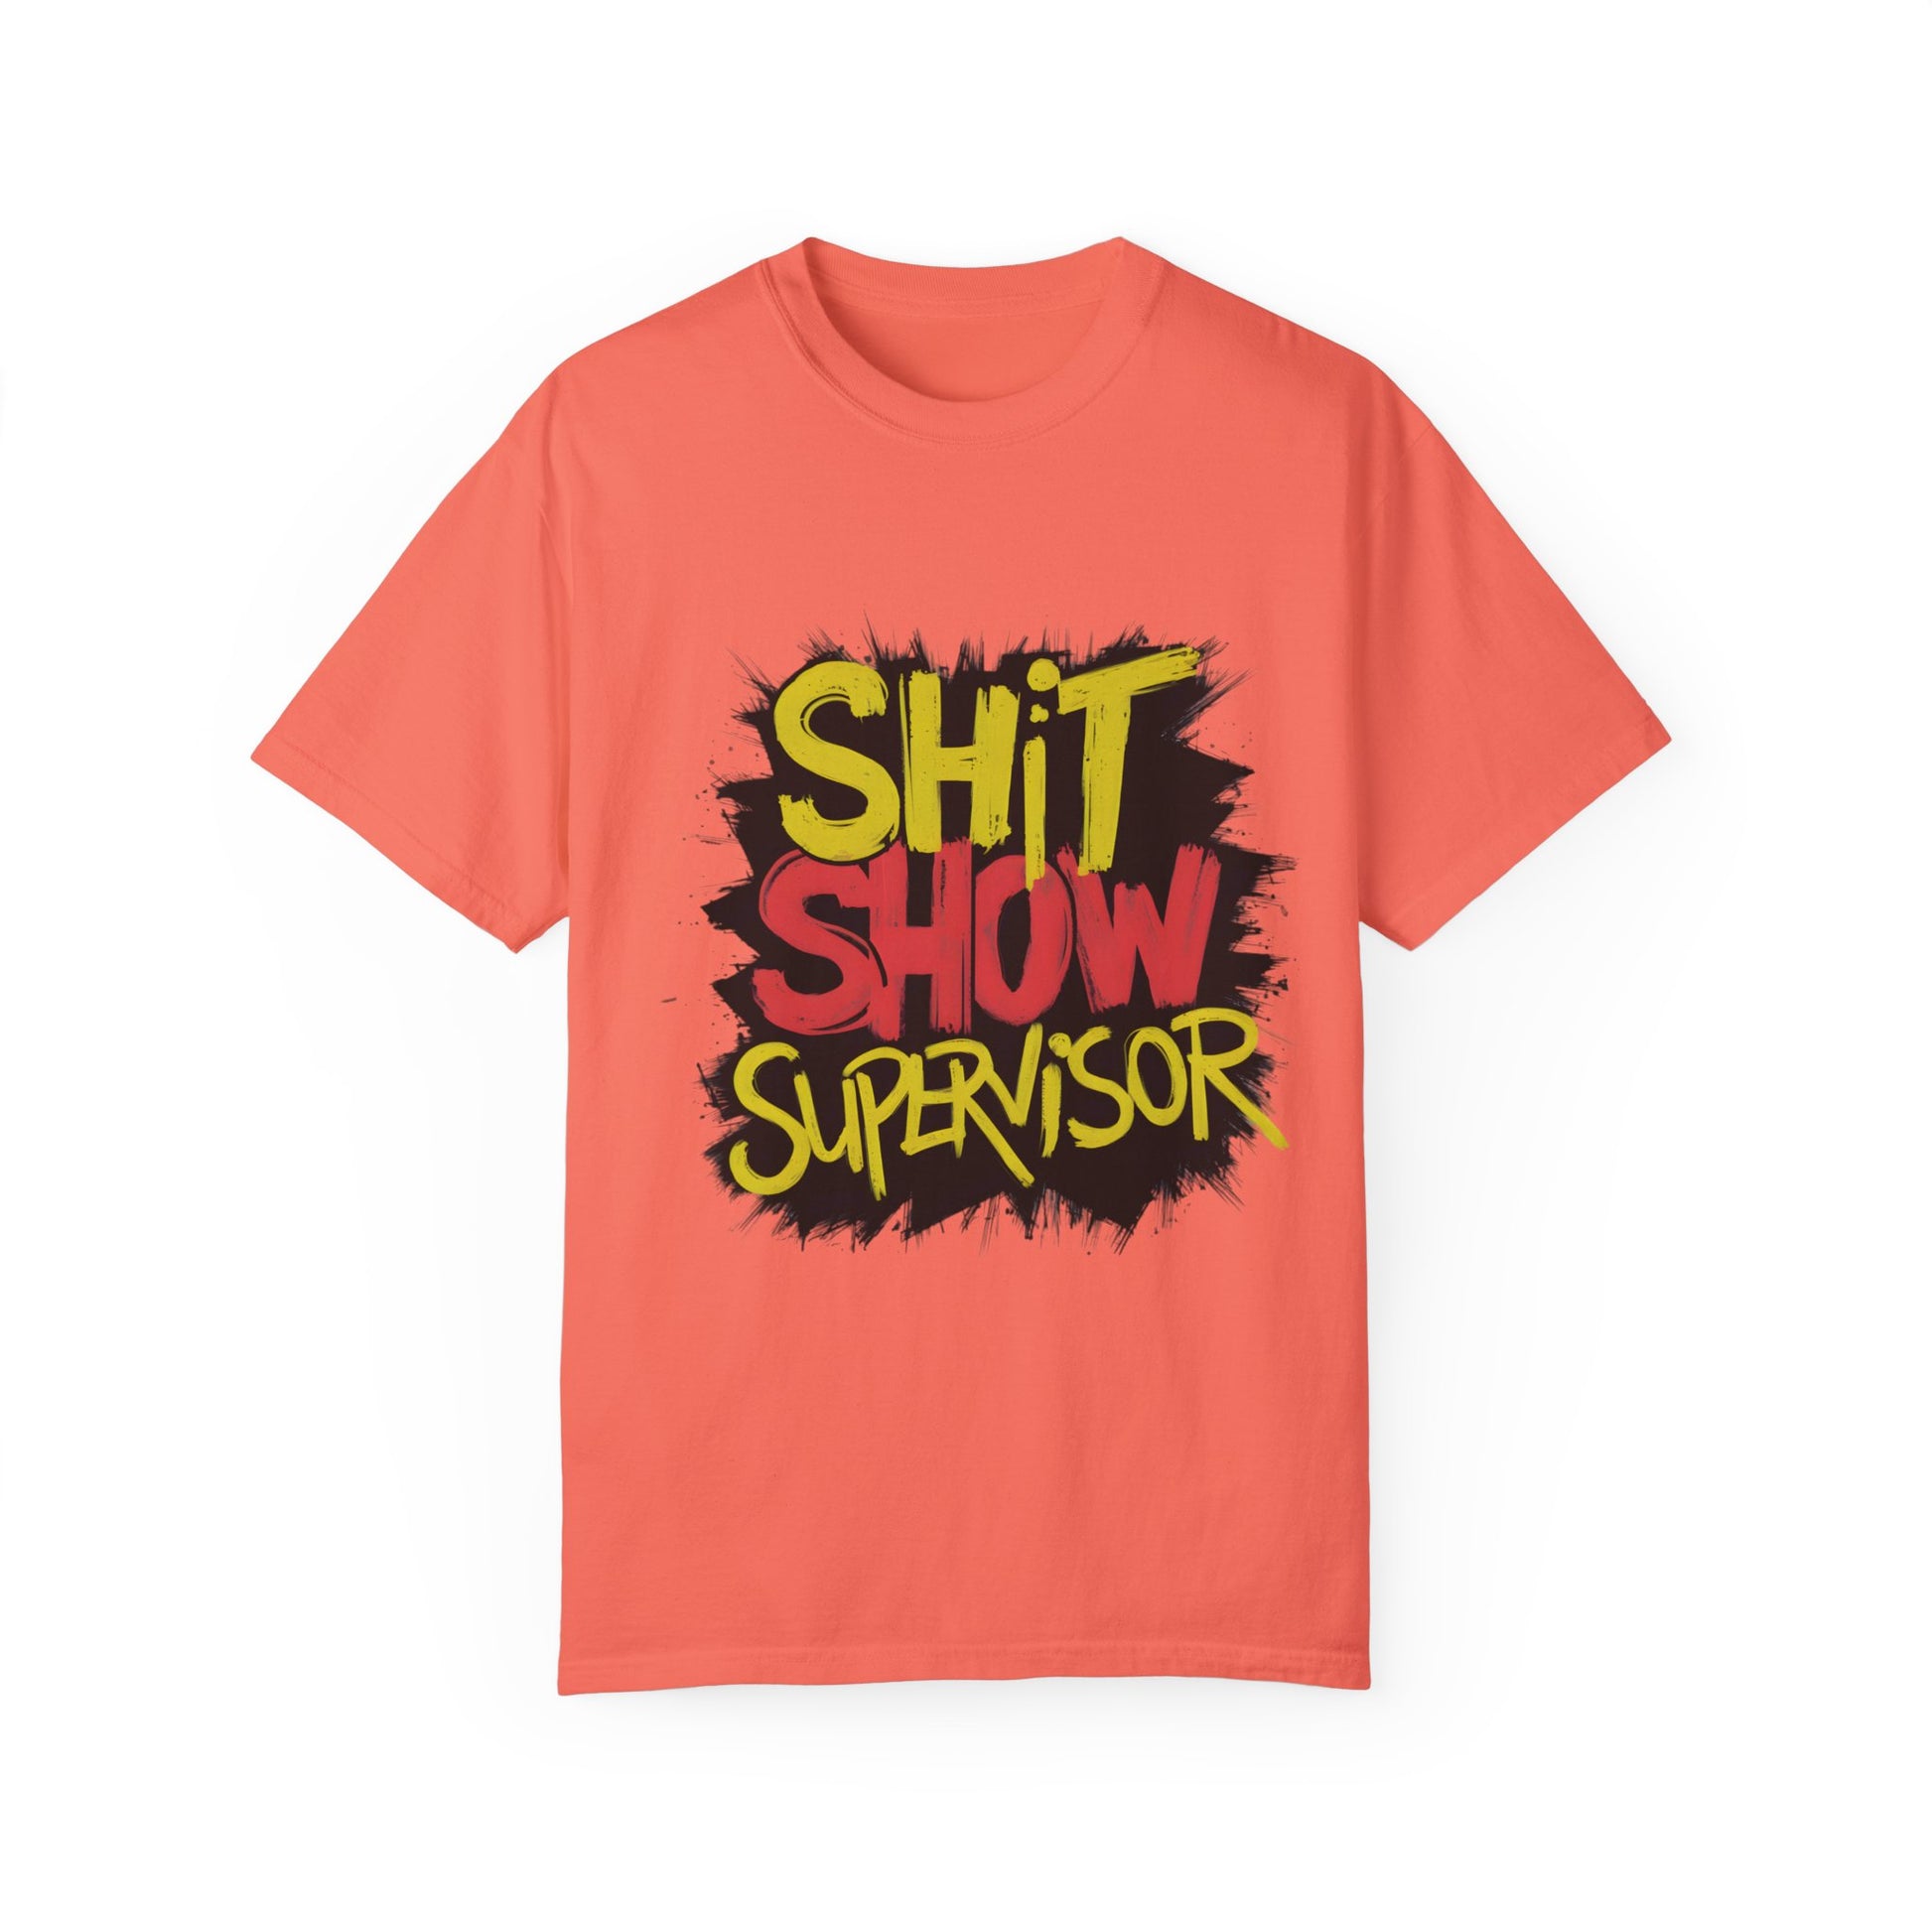 Shit Show Supervisor Urban Sarcastic Graphic Unisex Garment Dyed T-shirt Cotton Funny Humorous Graphic Soft Premium Unisex Men Women Bright Salmon T-shirt Birthday Gift-6